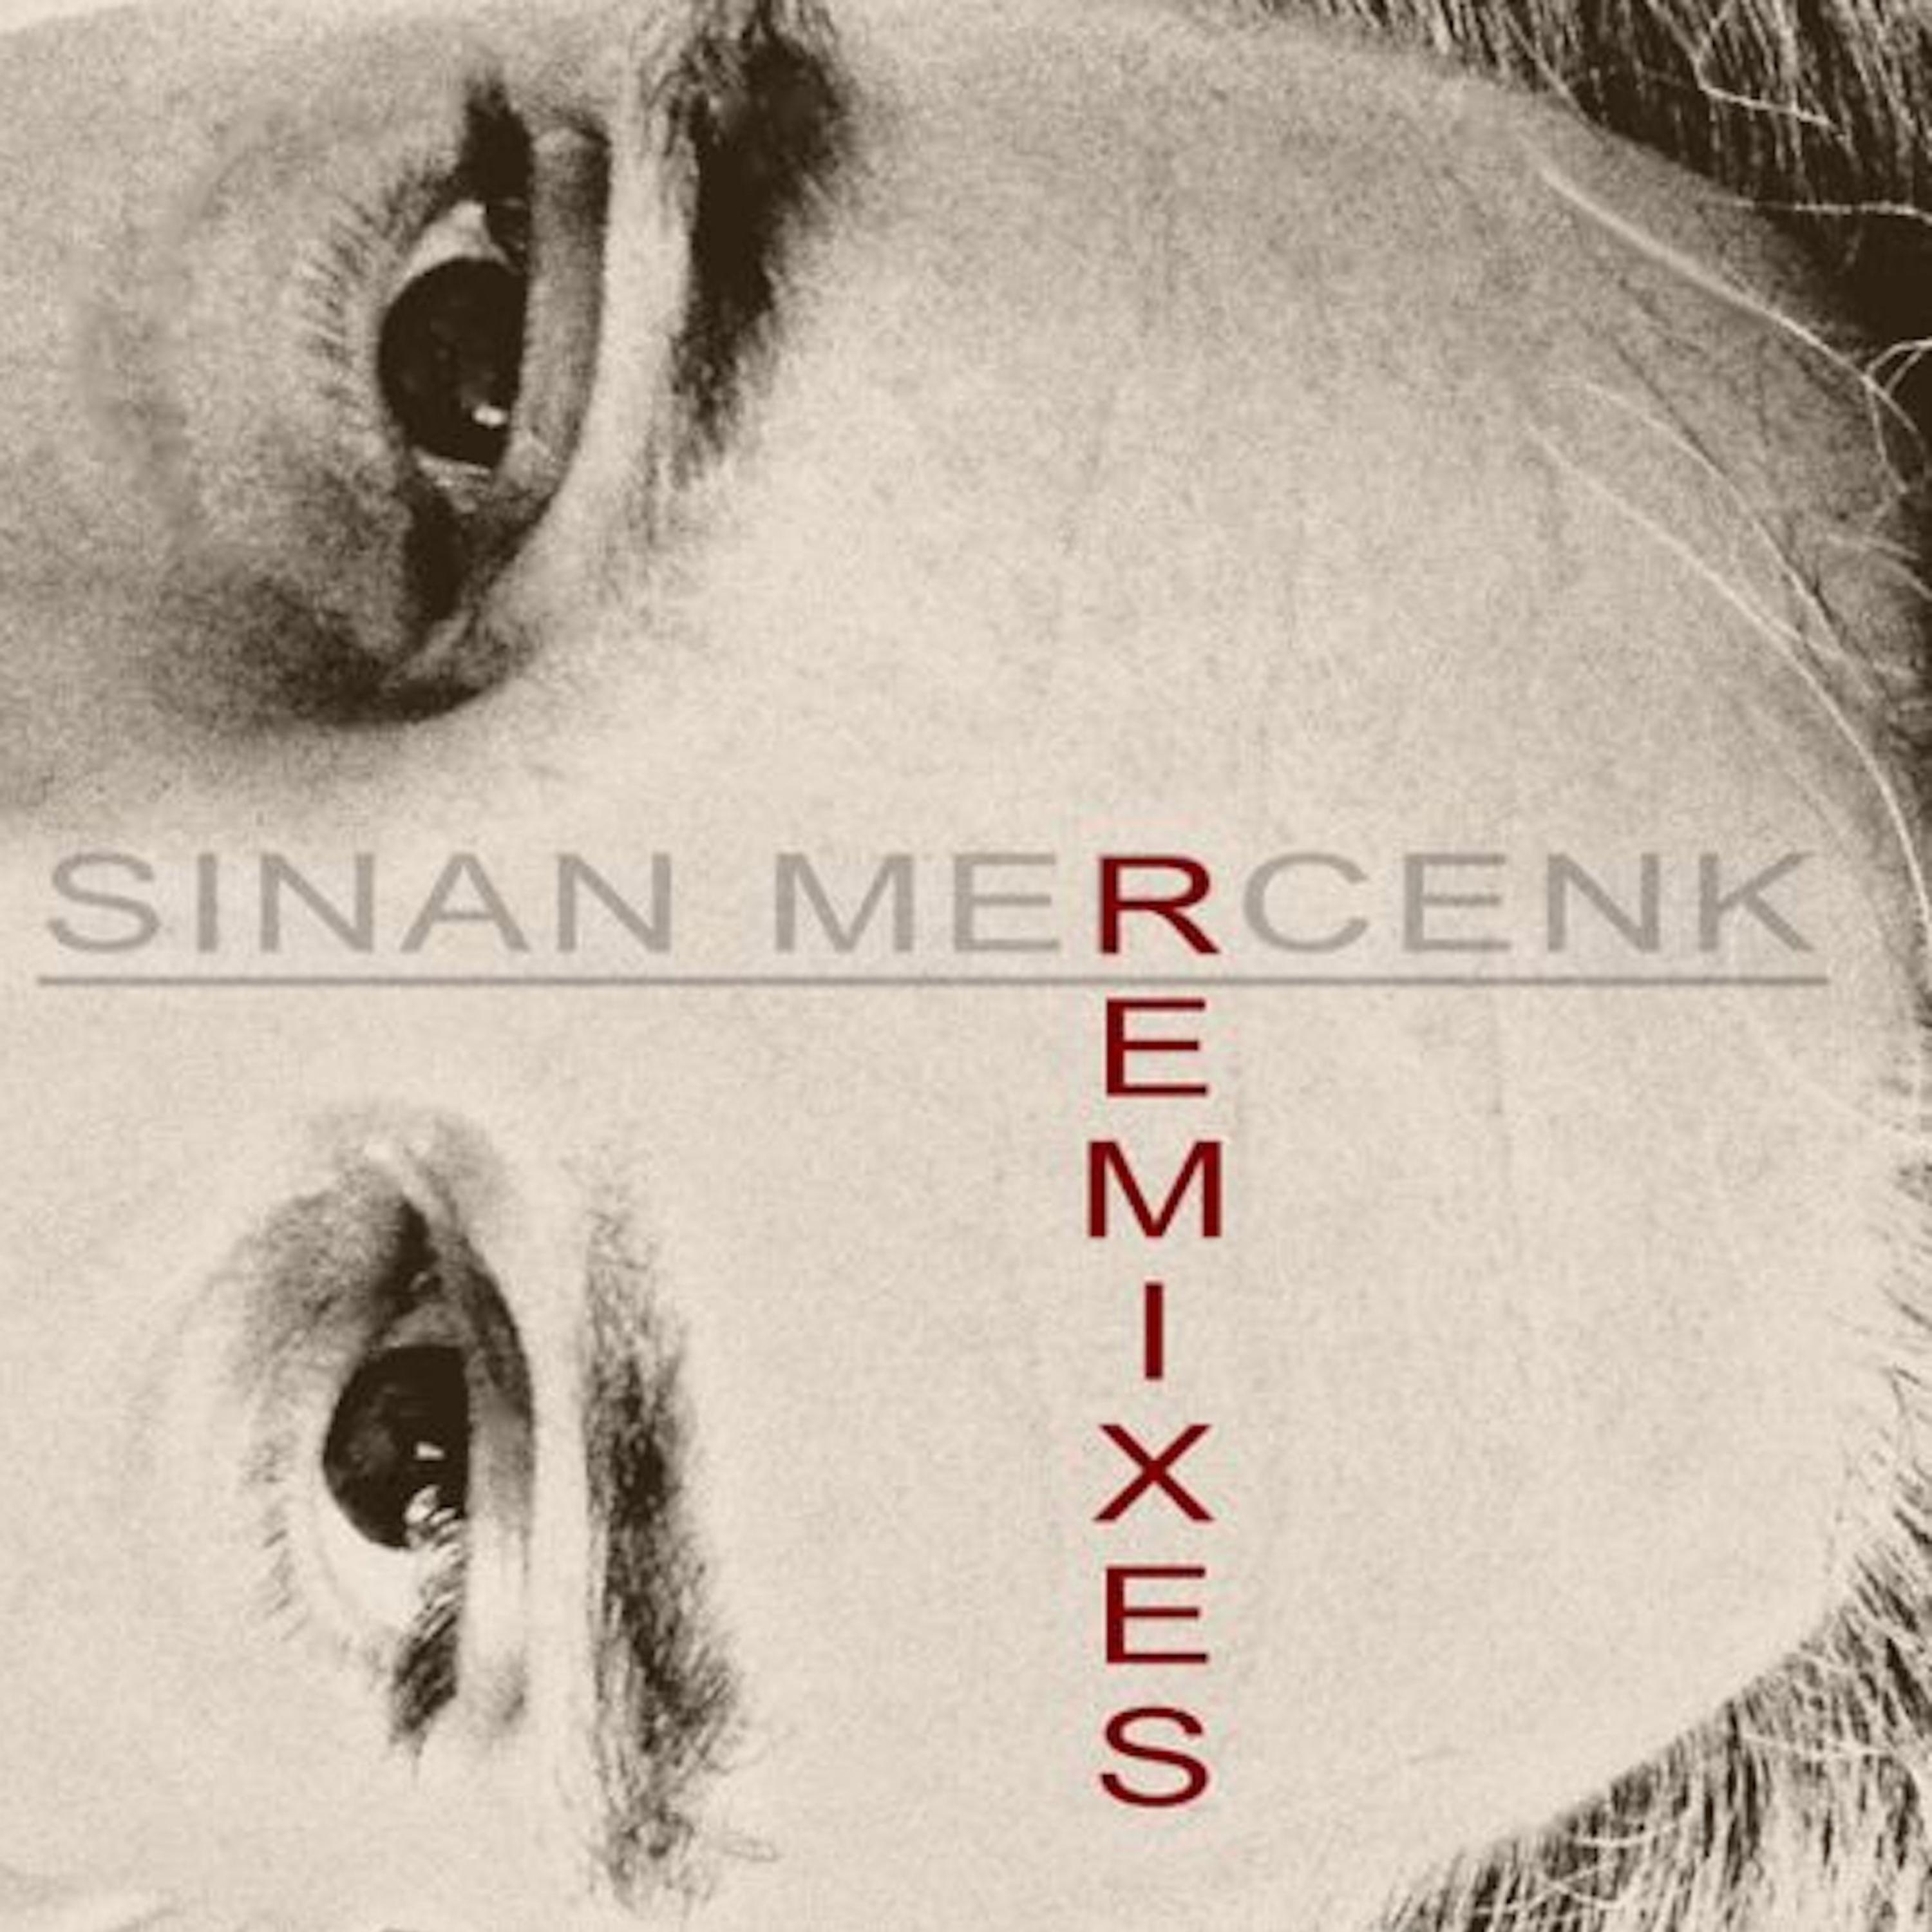 These Thoughts (Sinan Mercenk's Remix)